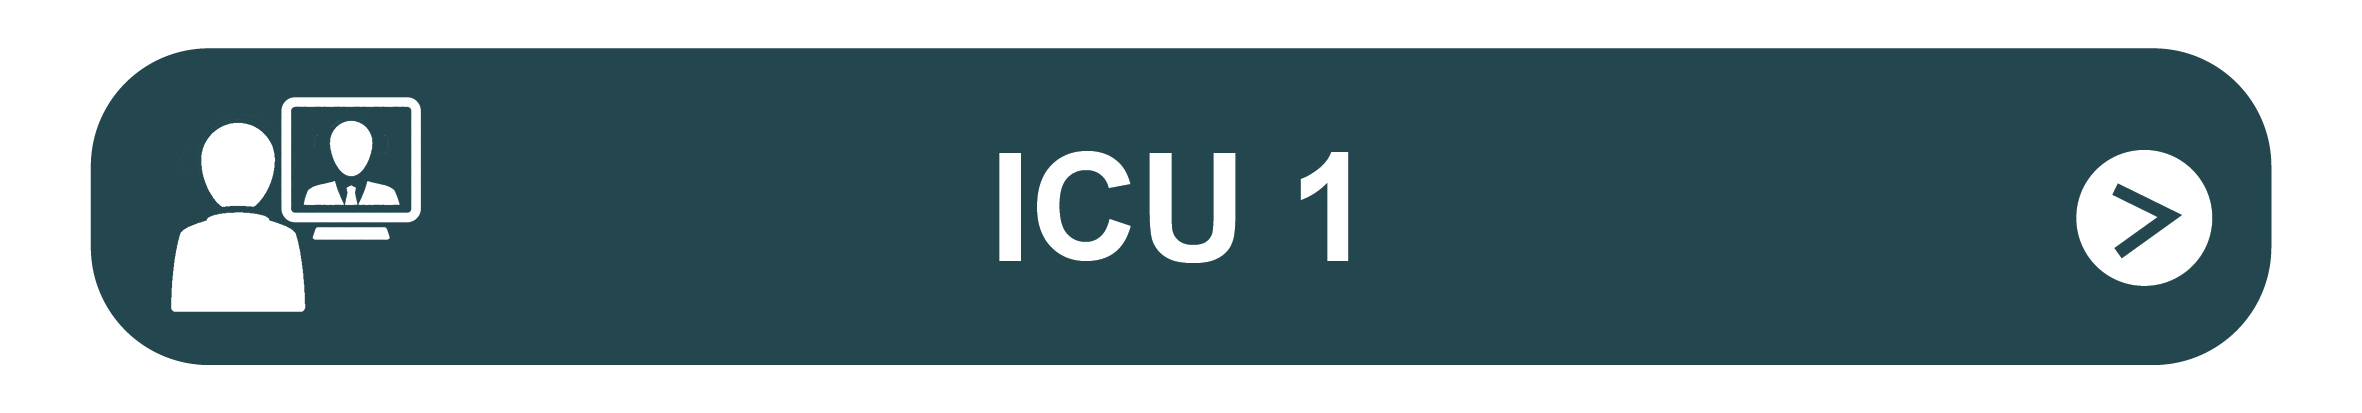 icu 1 waiting area